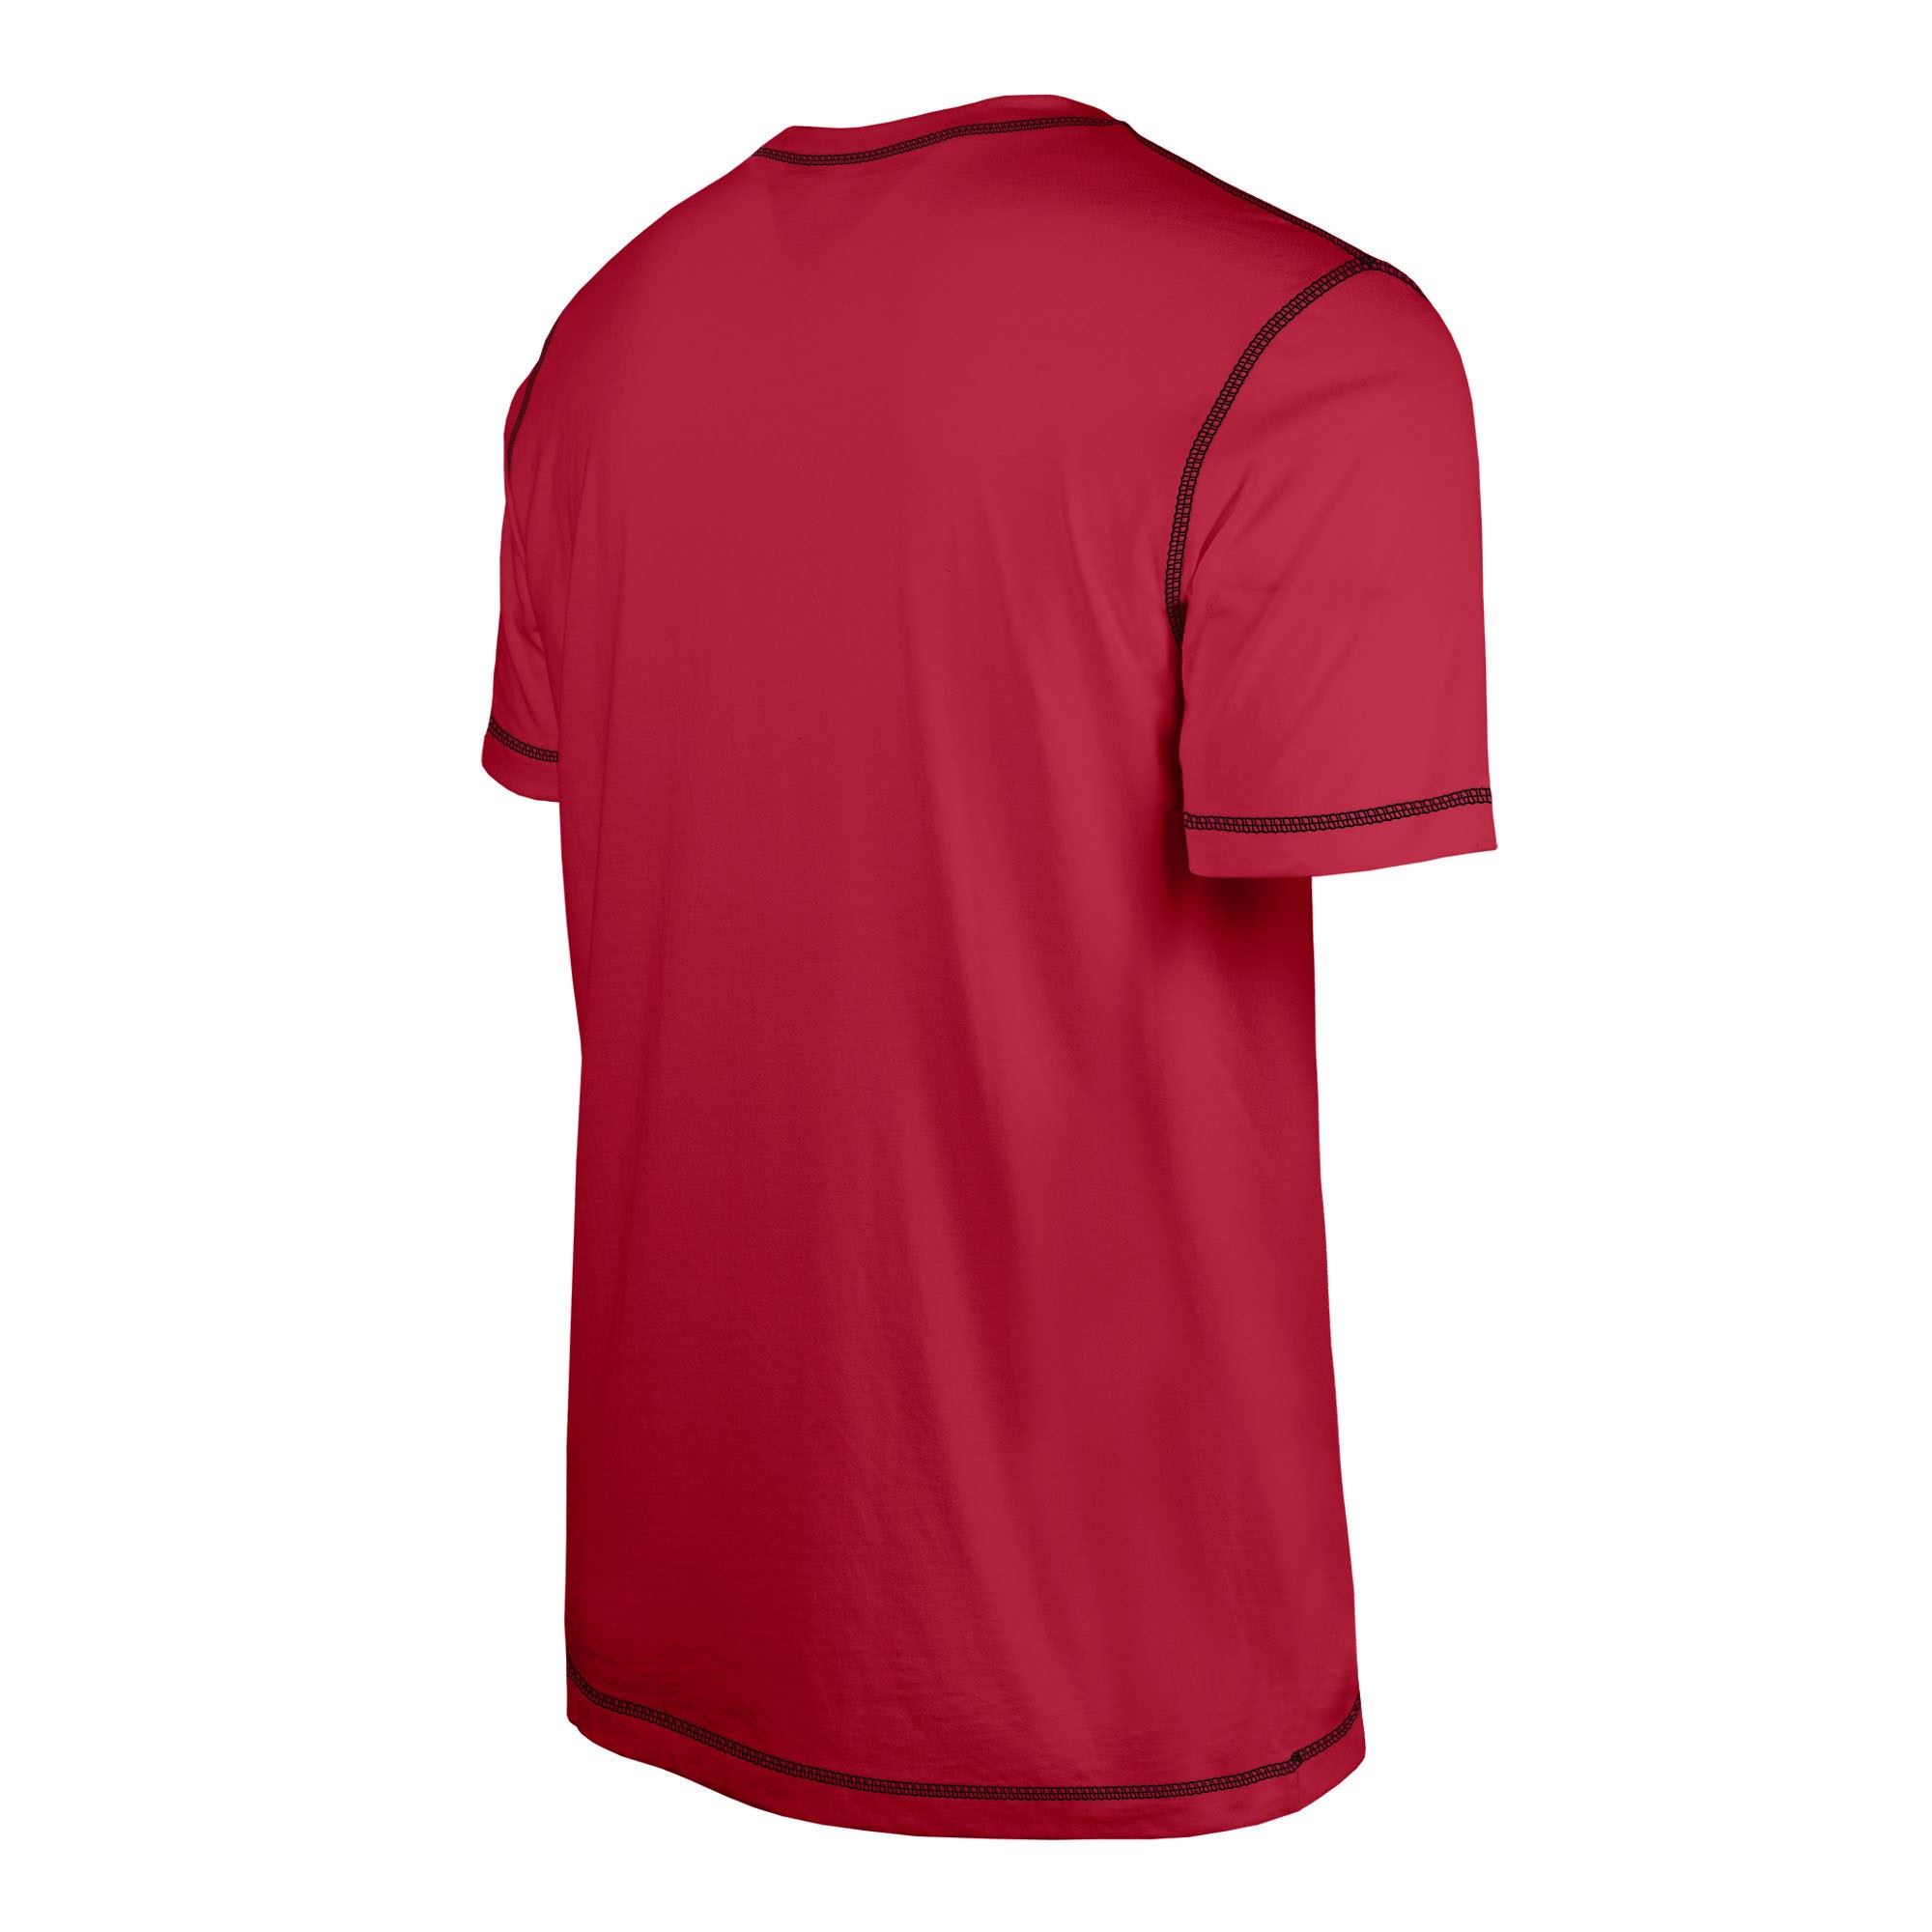 Arizona Cardinals NFL 2023 Sideline Red T-Shirt New Era